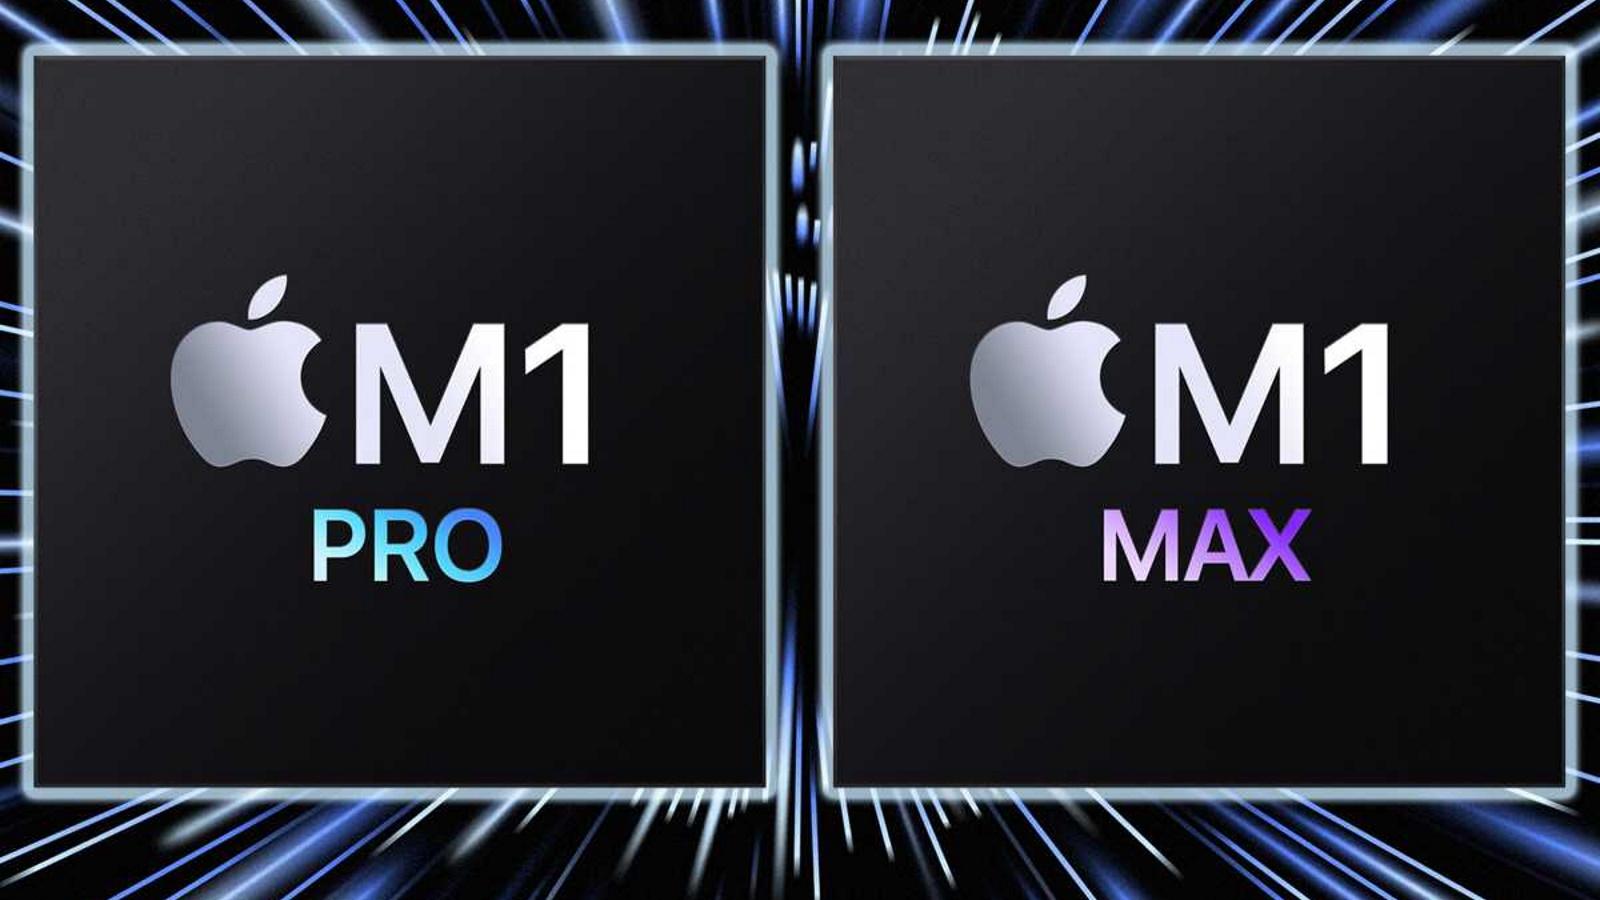 Apple M1 chips